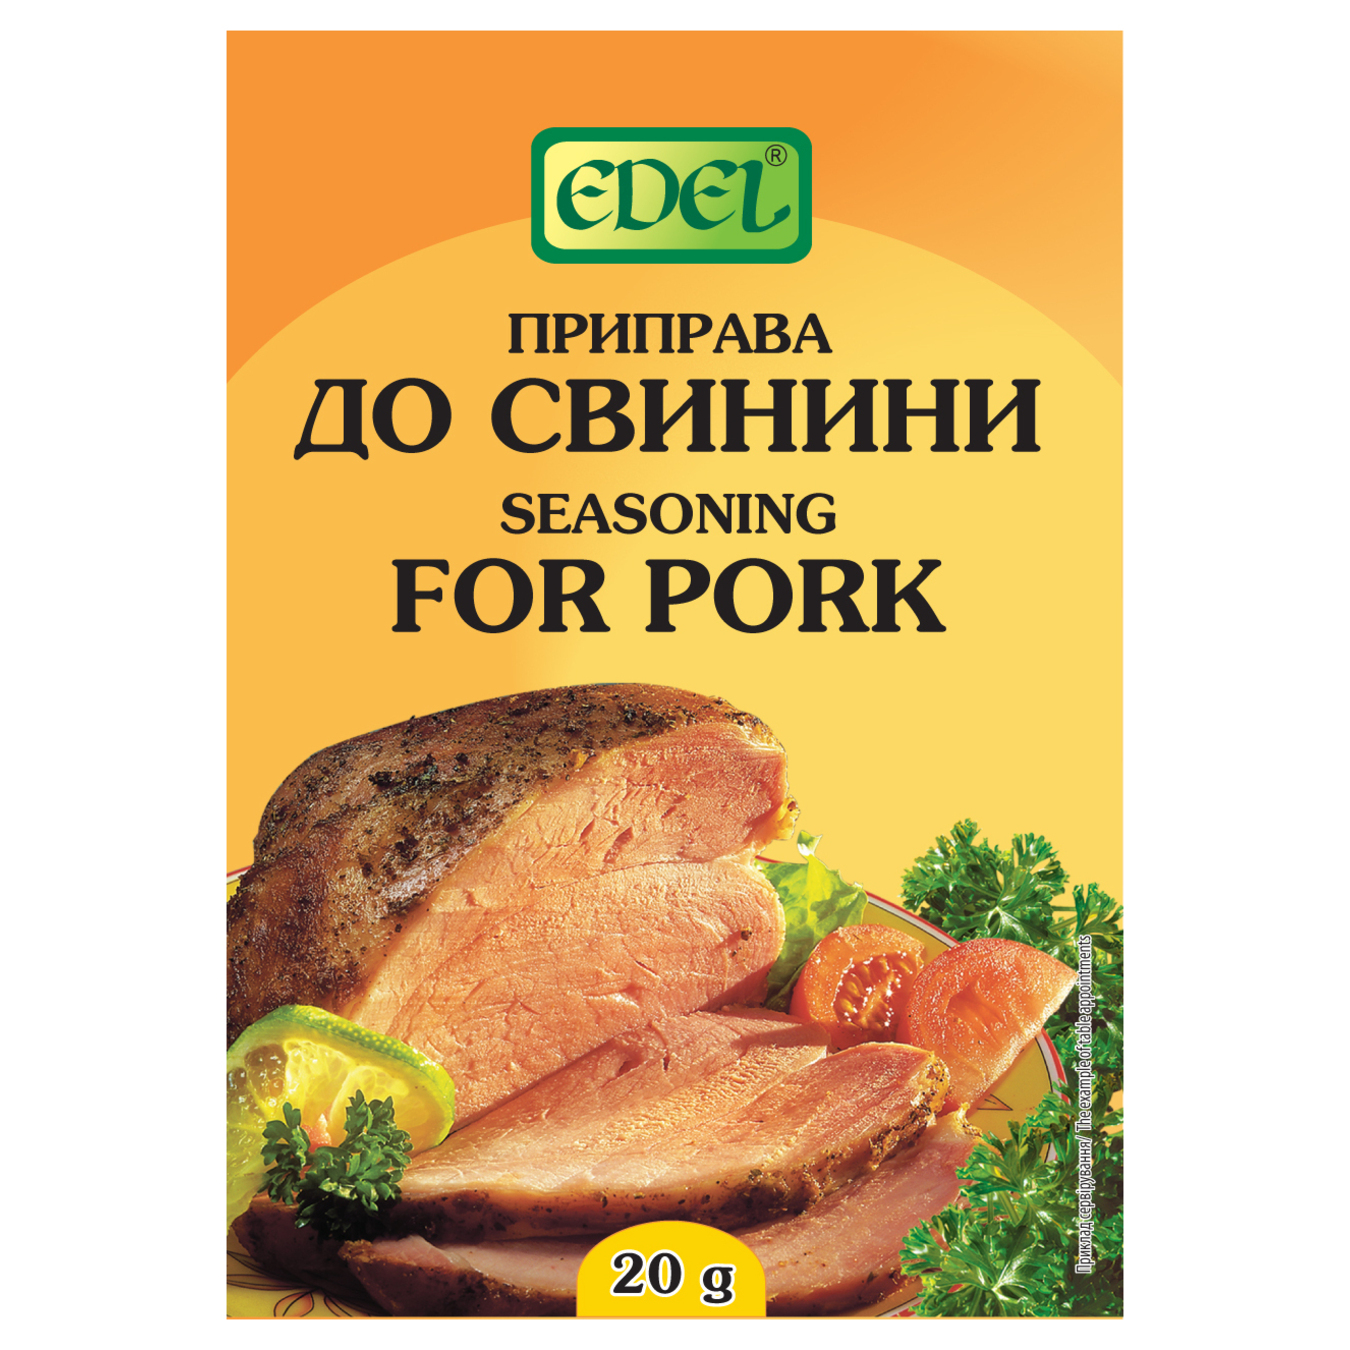 Edel to pork spices 20g